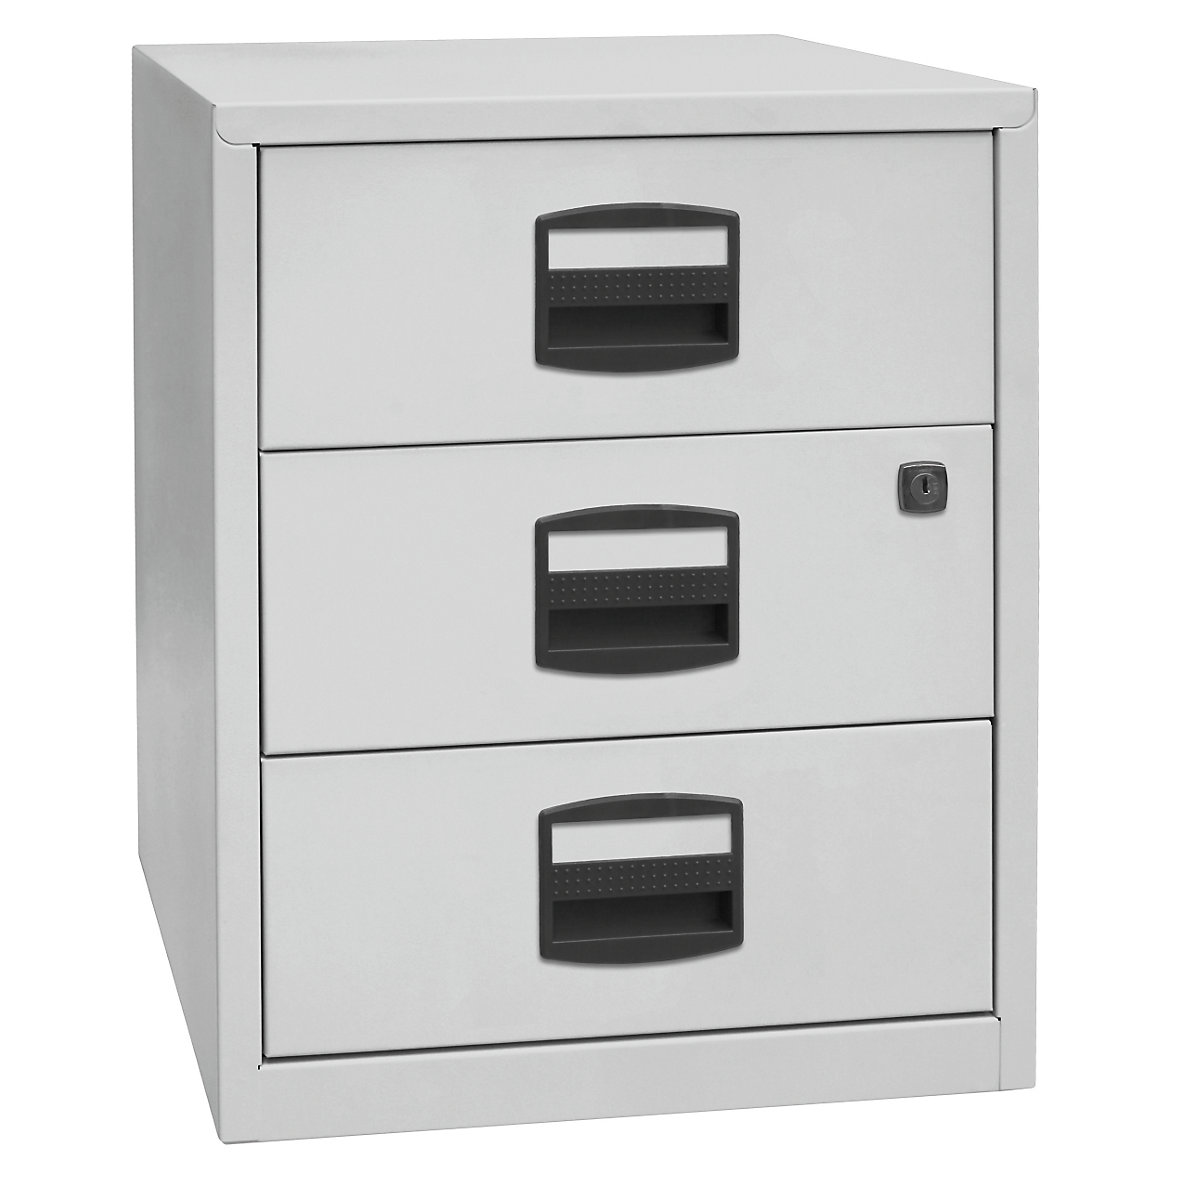 PFA mobile pedestal – BISLEY, 3 universal drawers, light grey-6